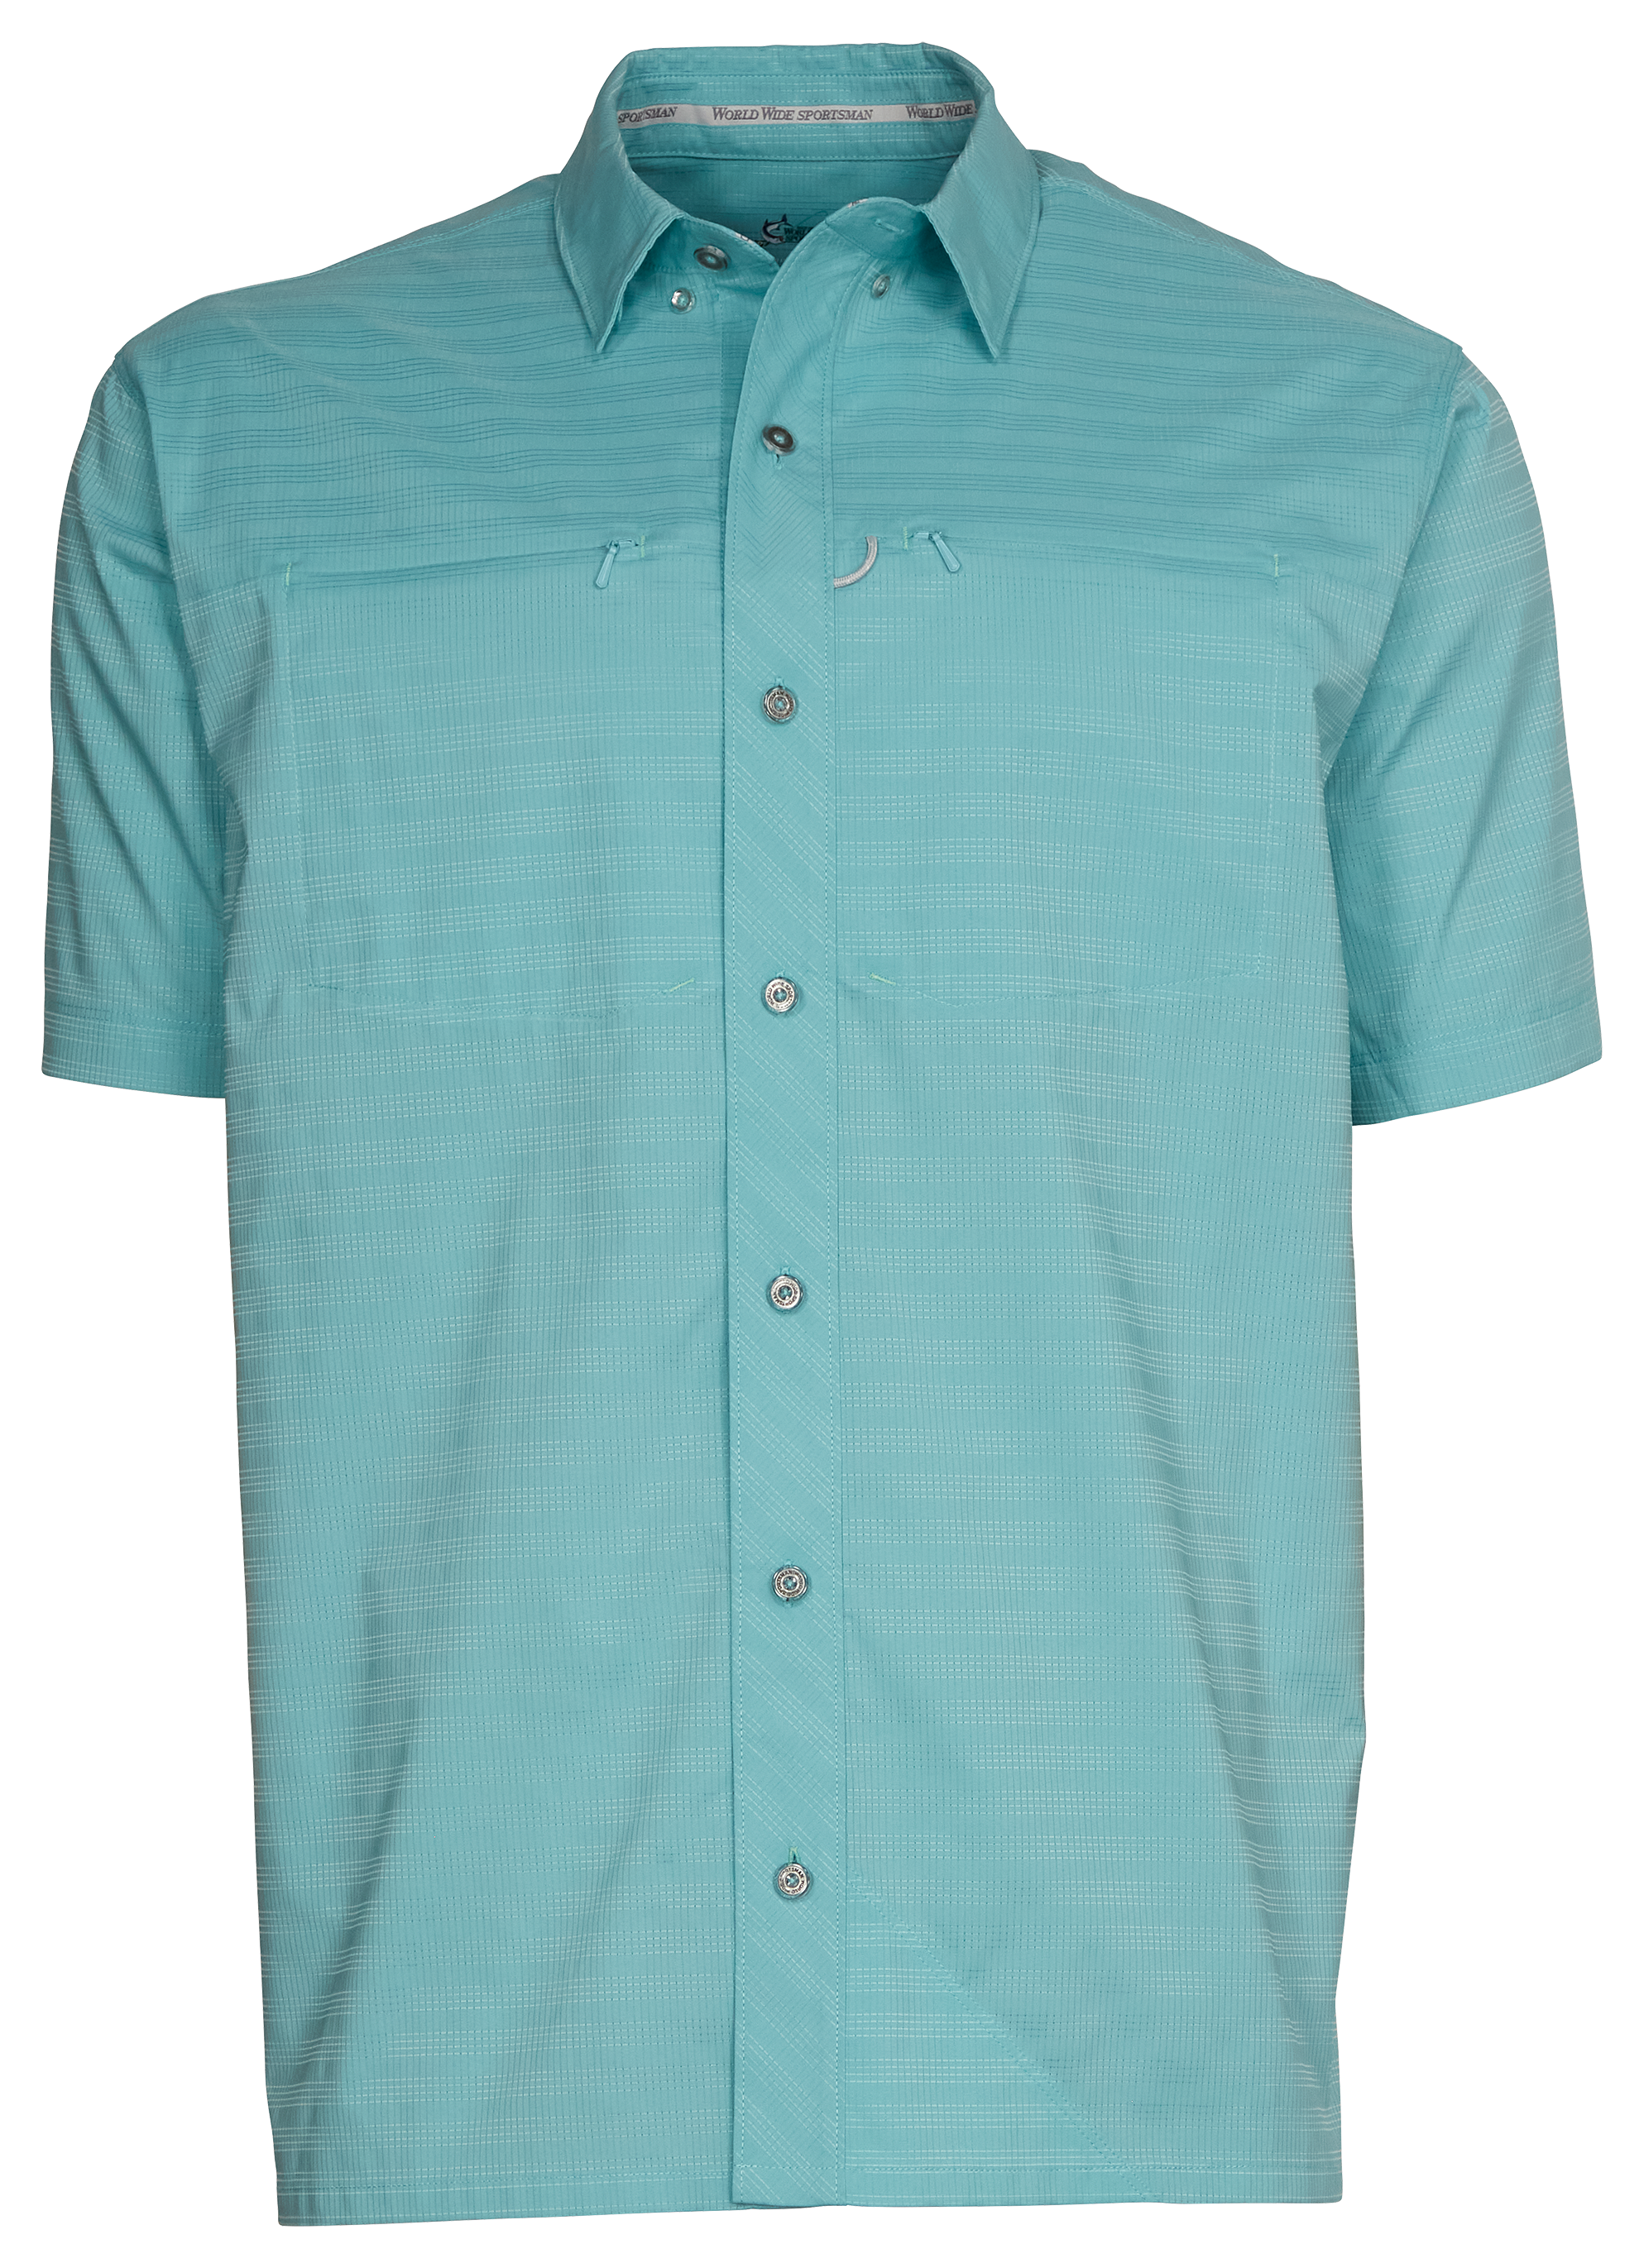 World Wide Sportsman Seacrest 2-Pocket Short-Sleeve Button-Down Shirt for Men - Reef Waters - S